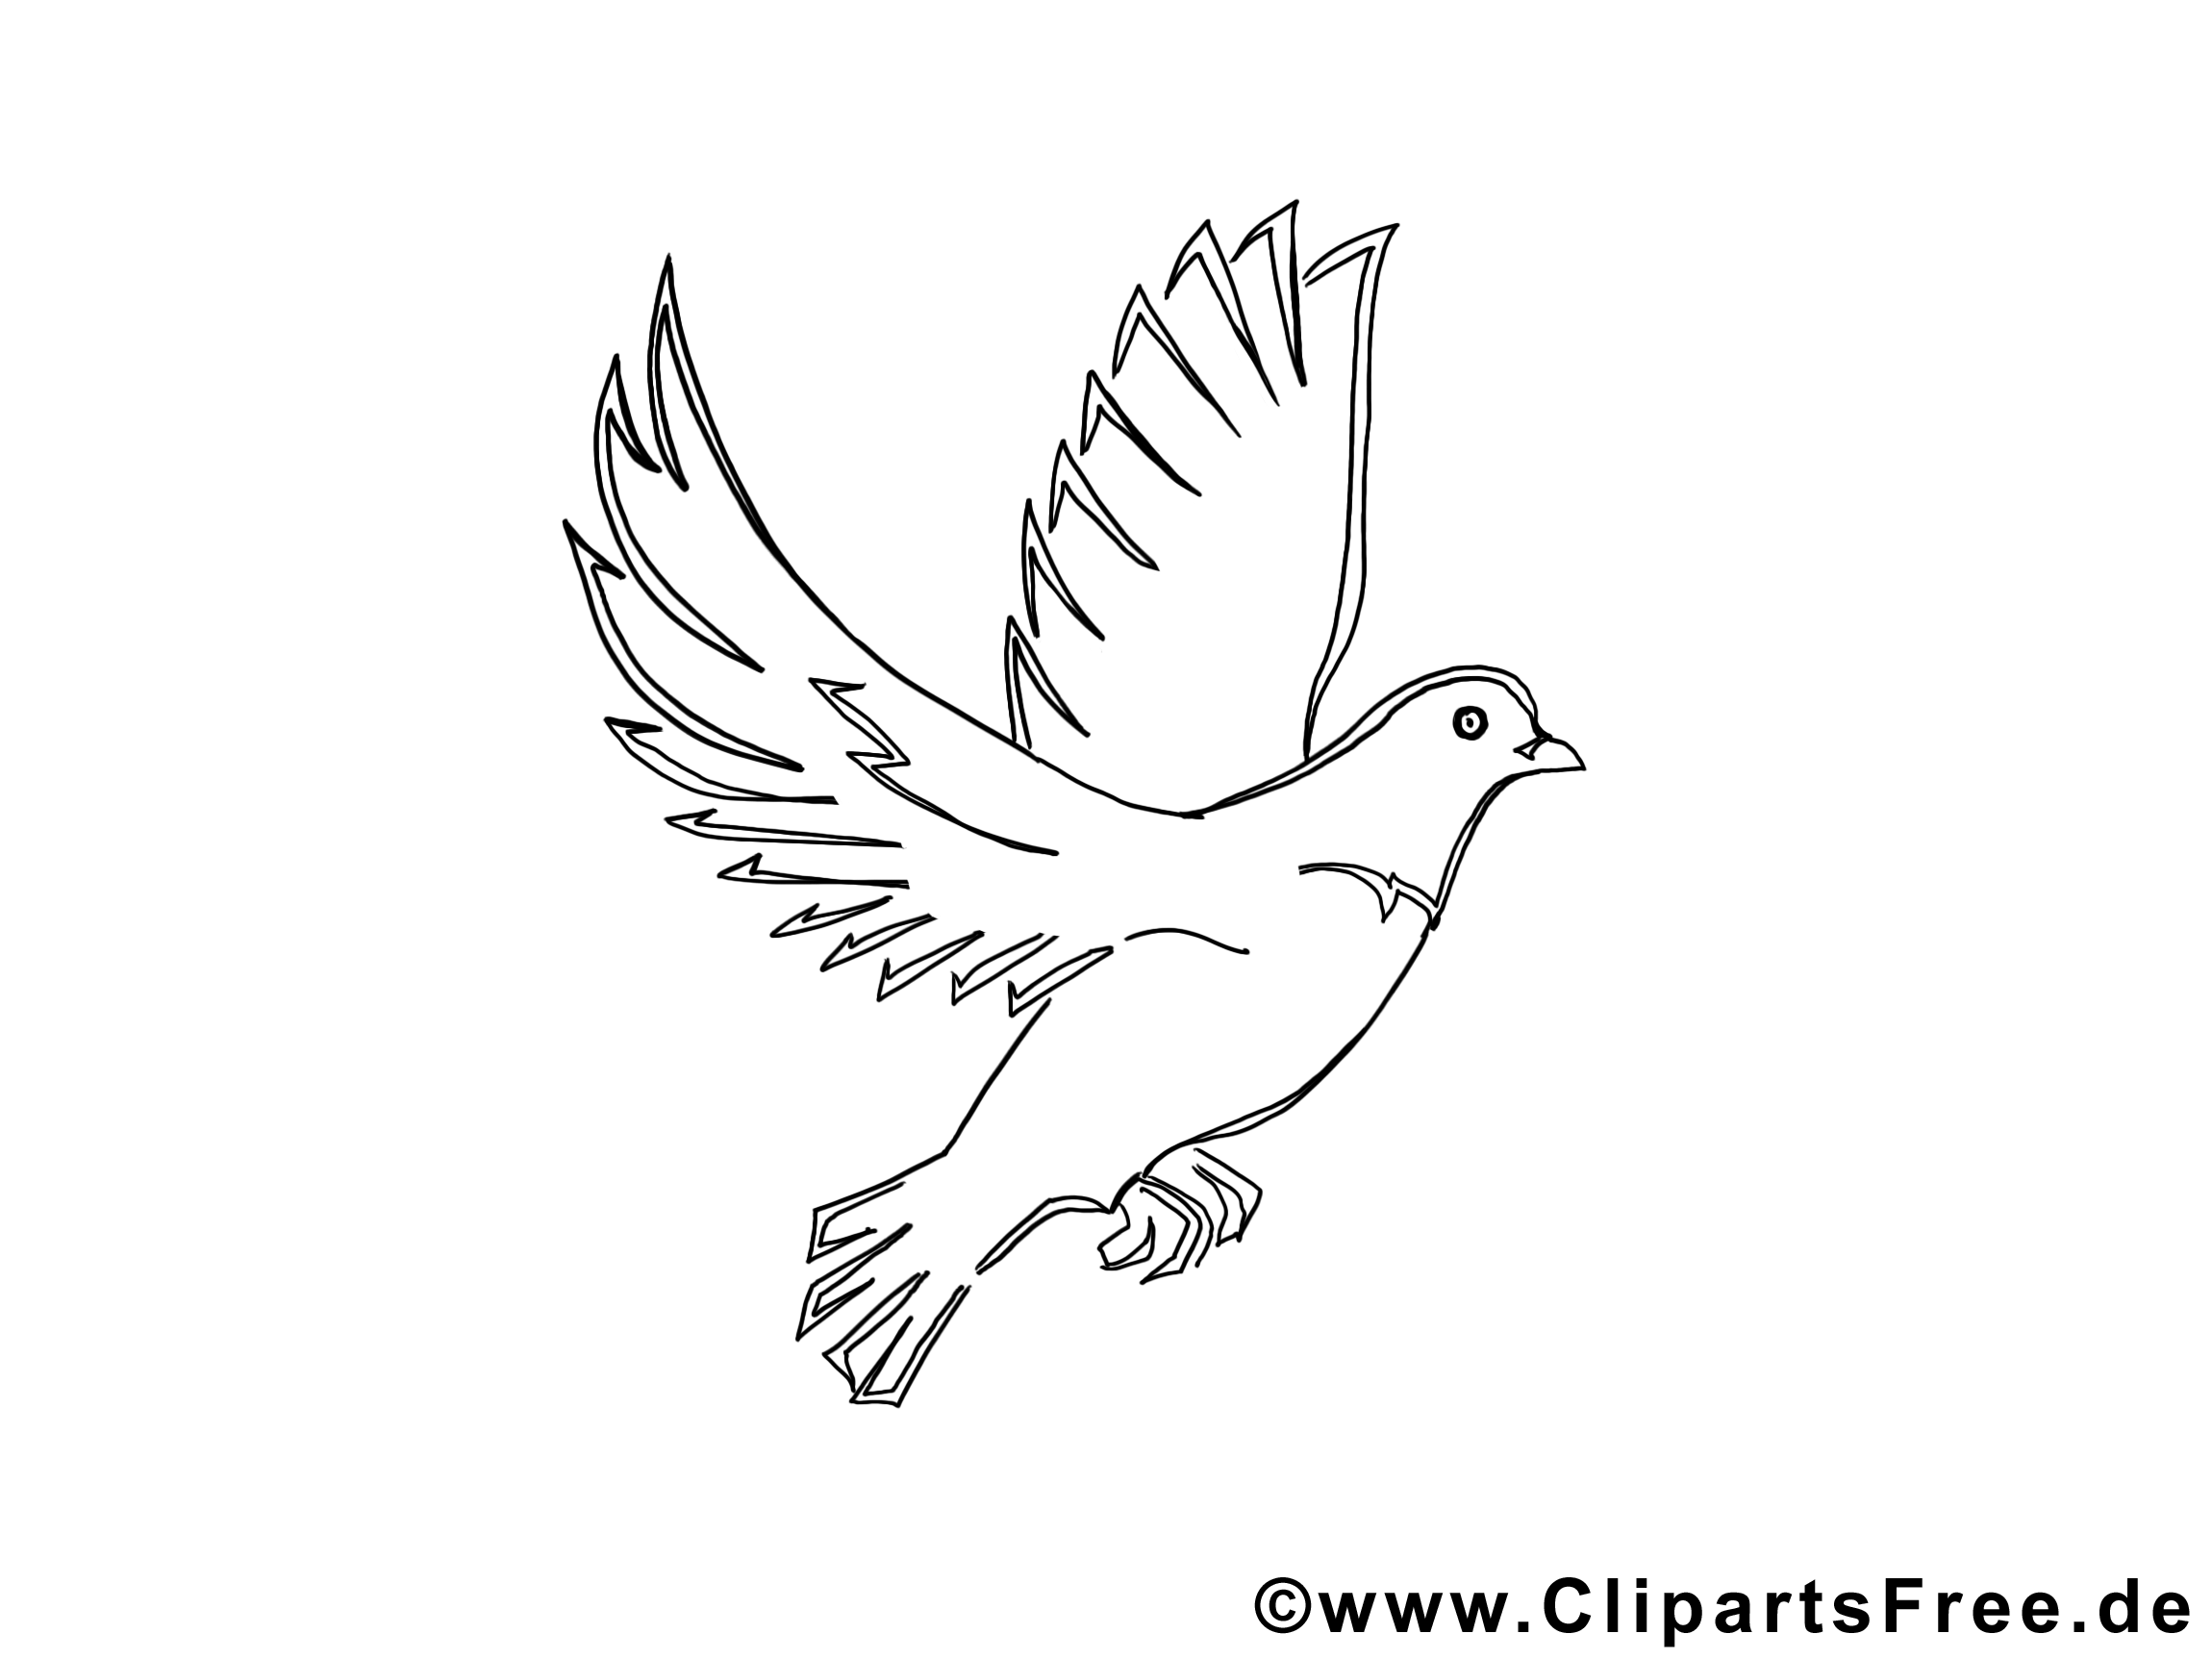 clipart gratuit colombe - photo #24